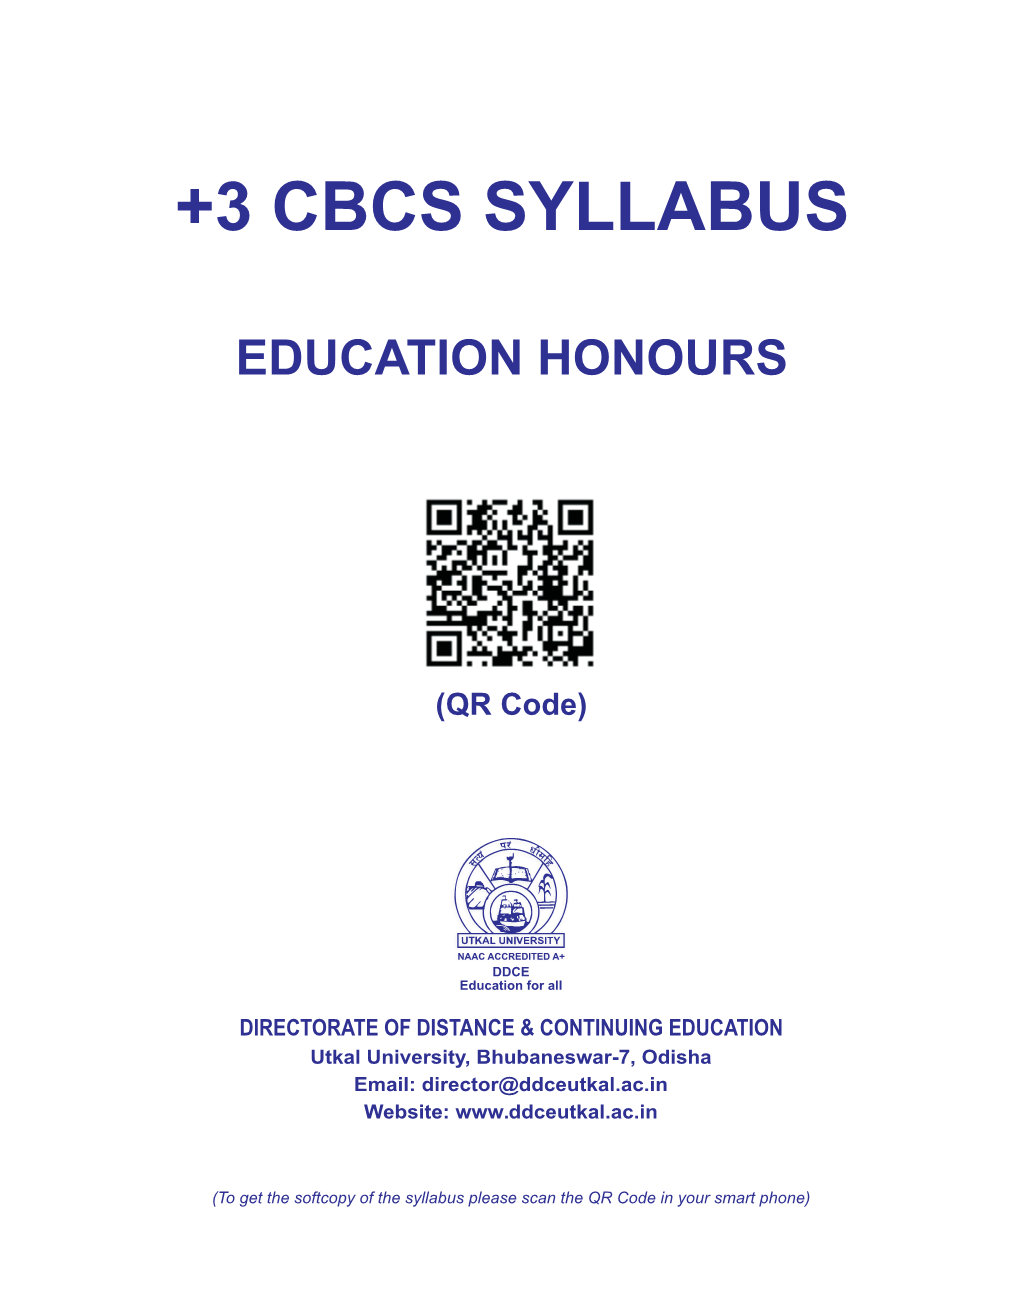 Education Honours